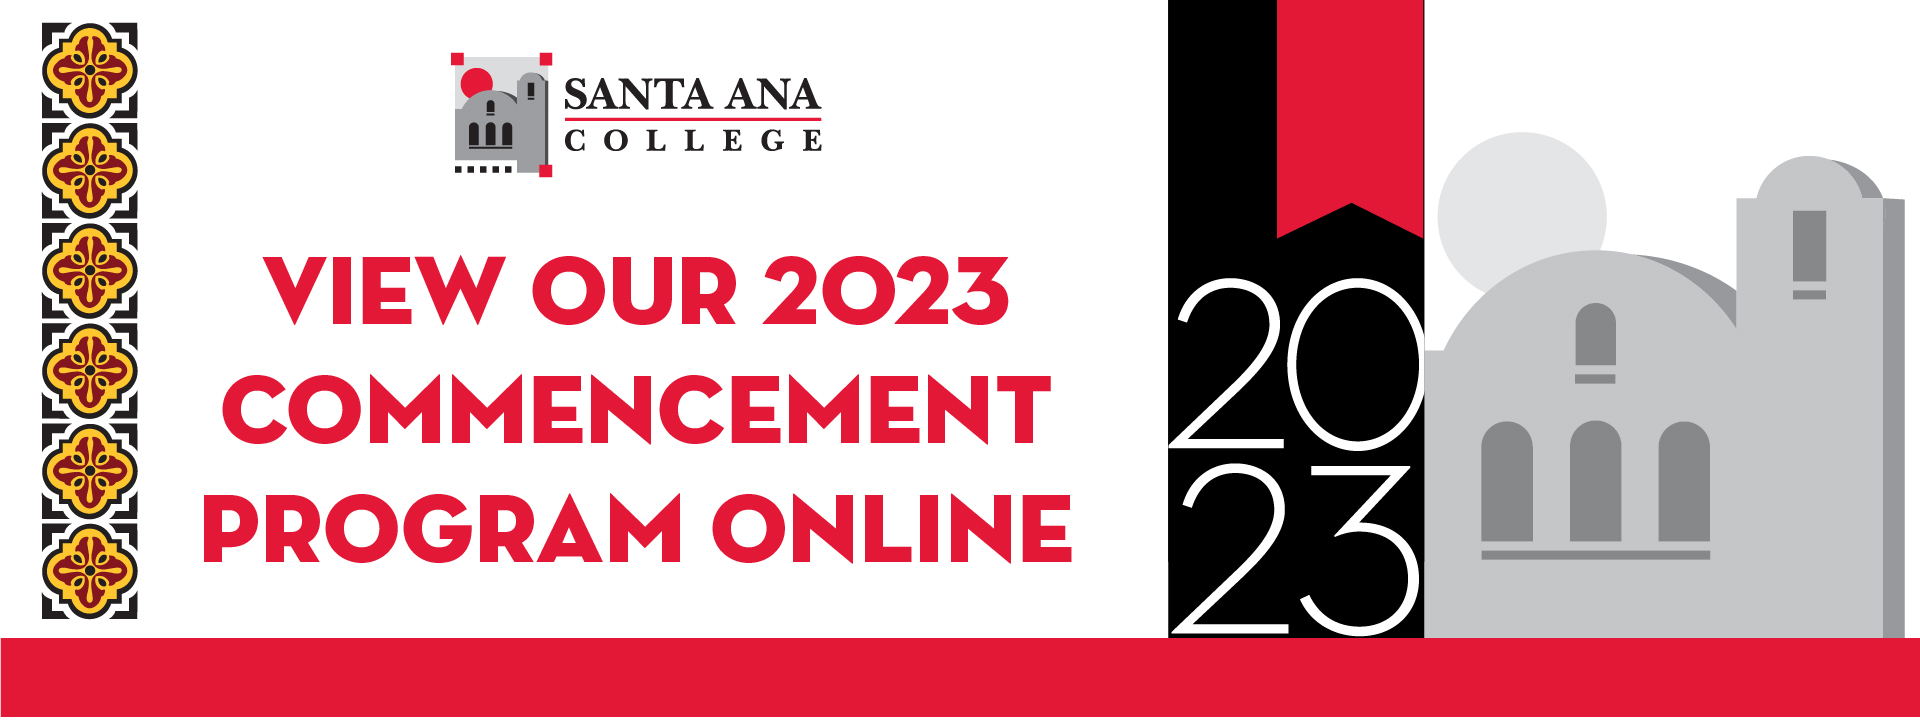 View the 2023 Commencement Program online